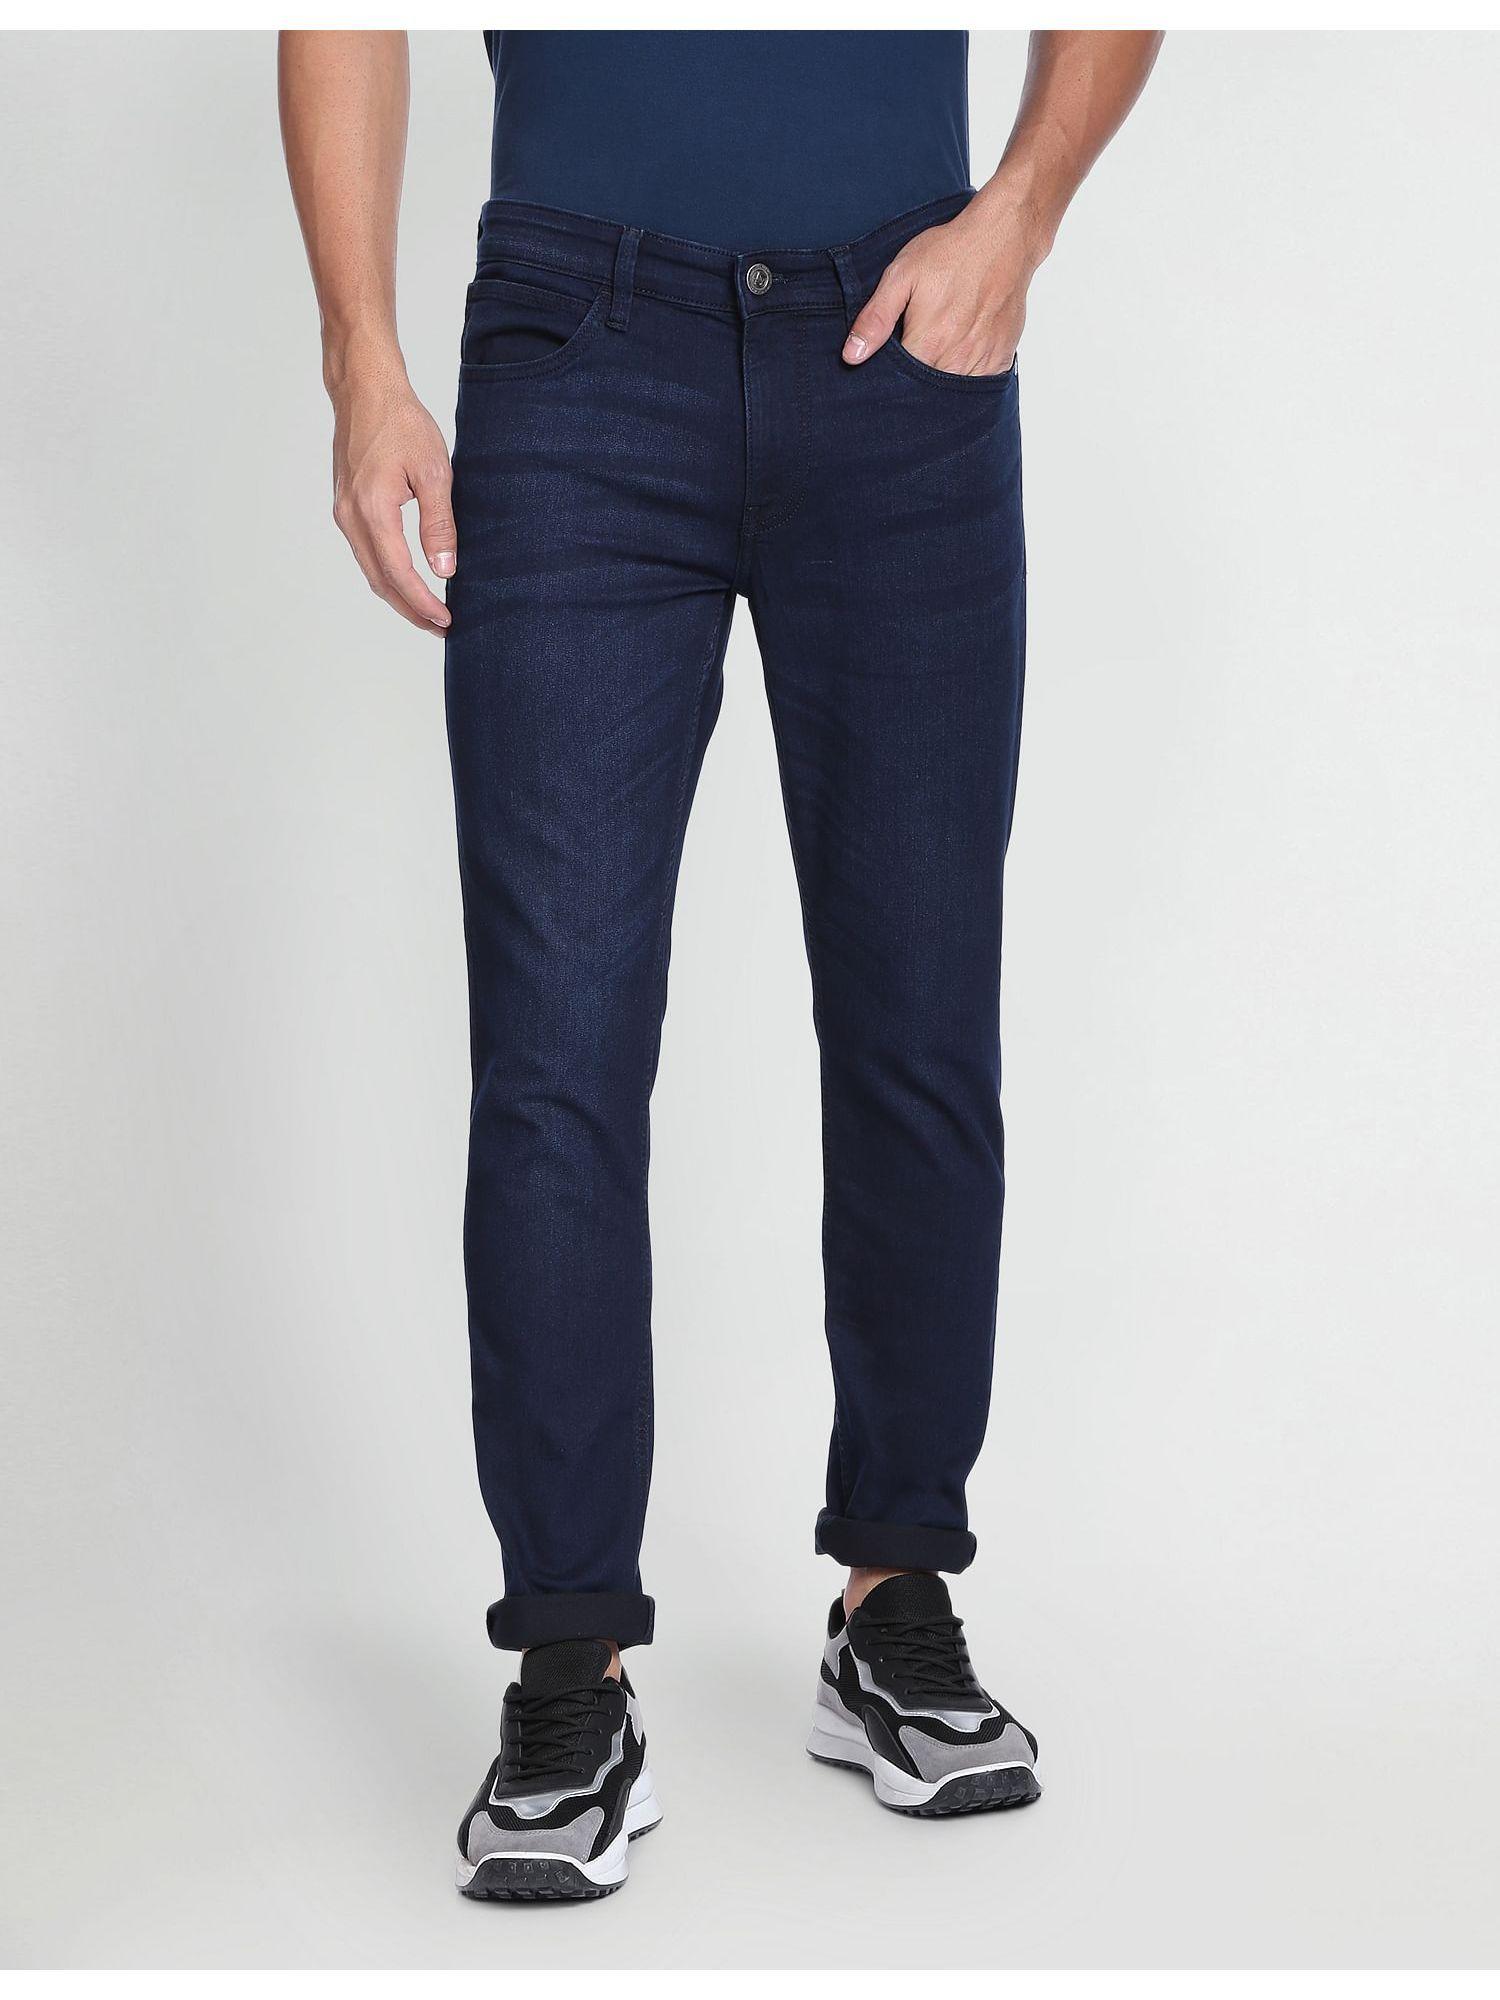 sports blue mid rise slim fit jeans